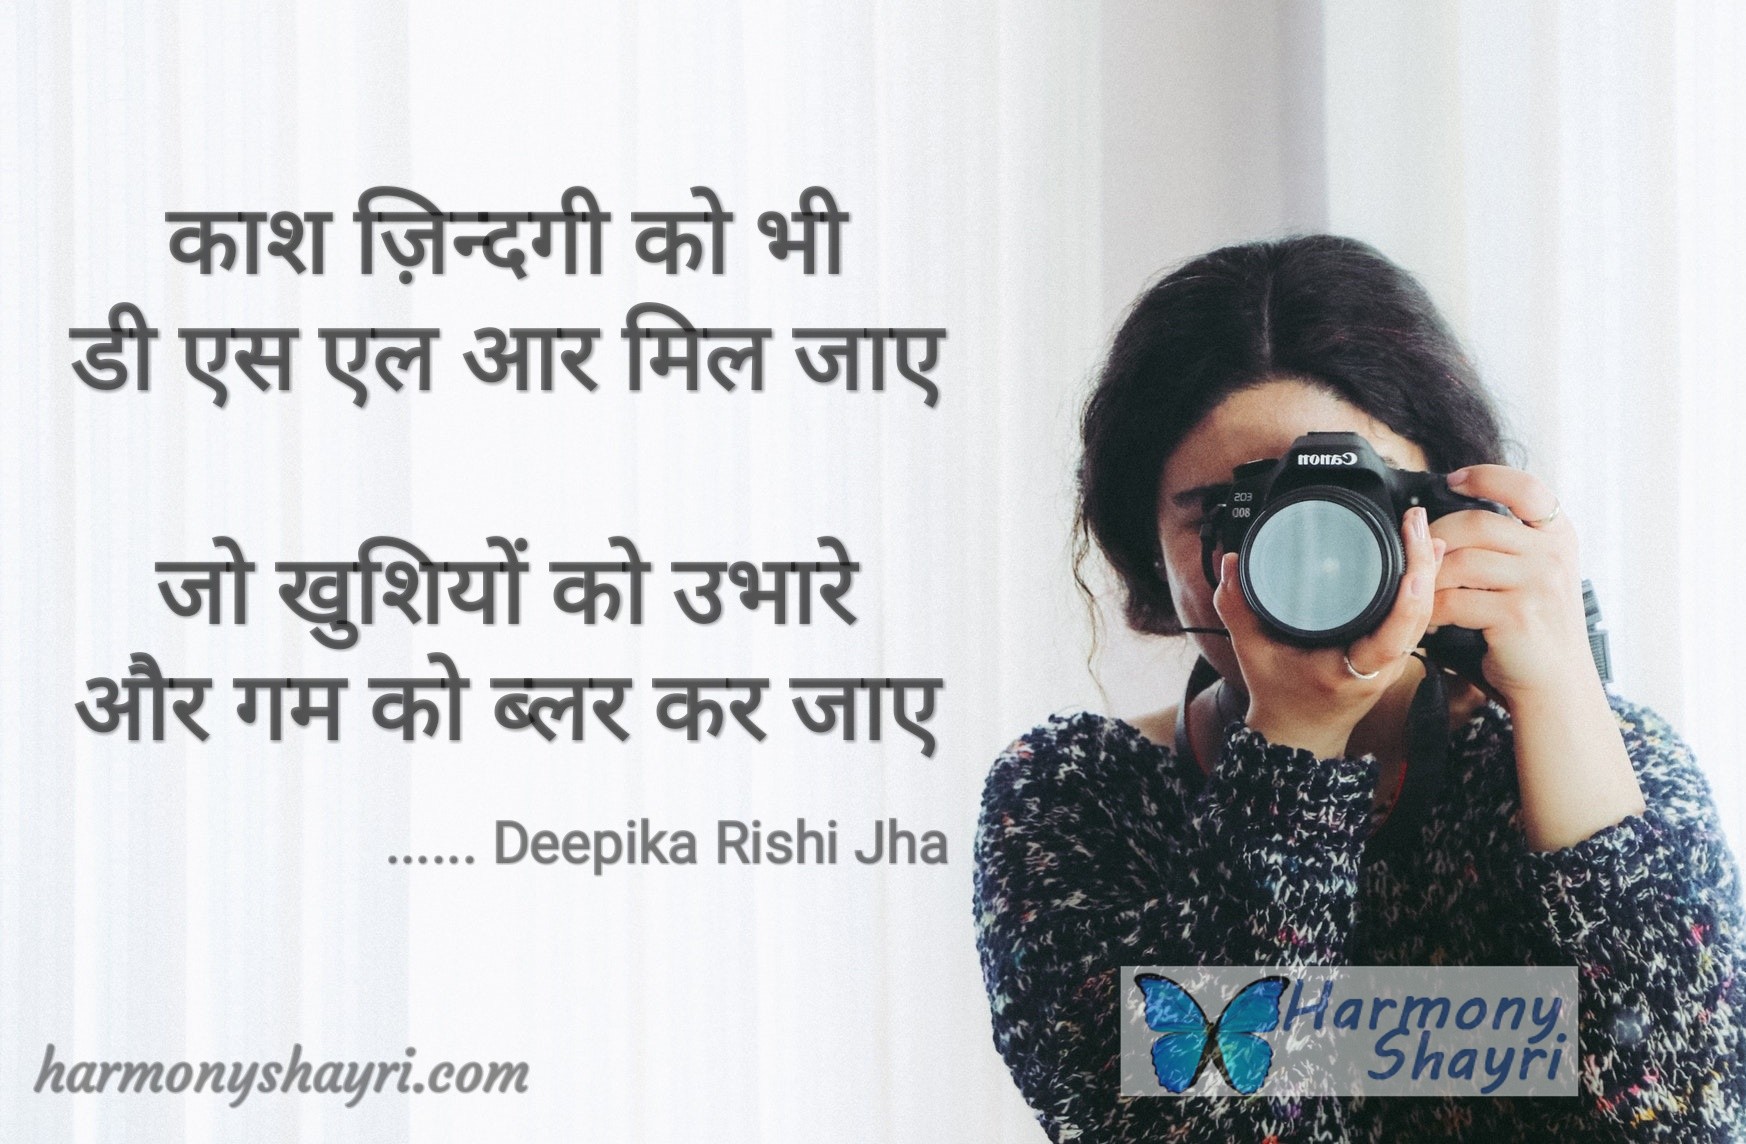 DSLR – Deepika Rishi Jha